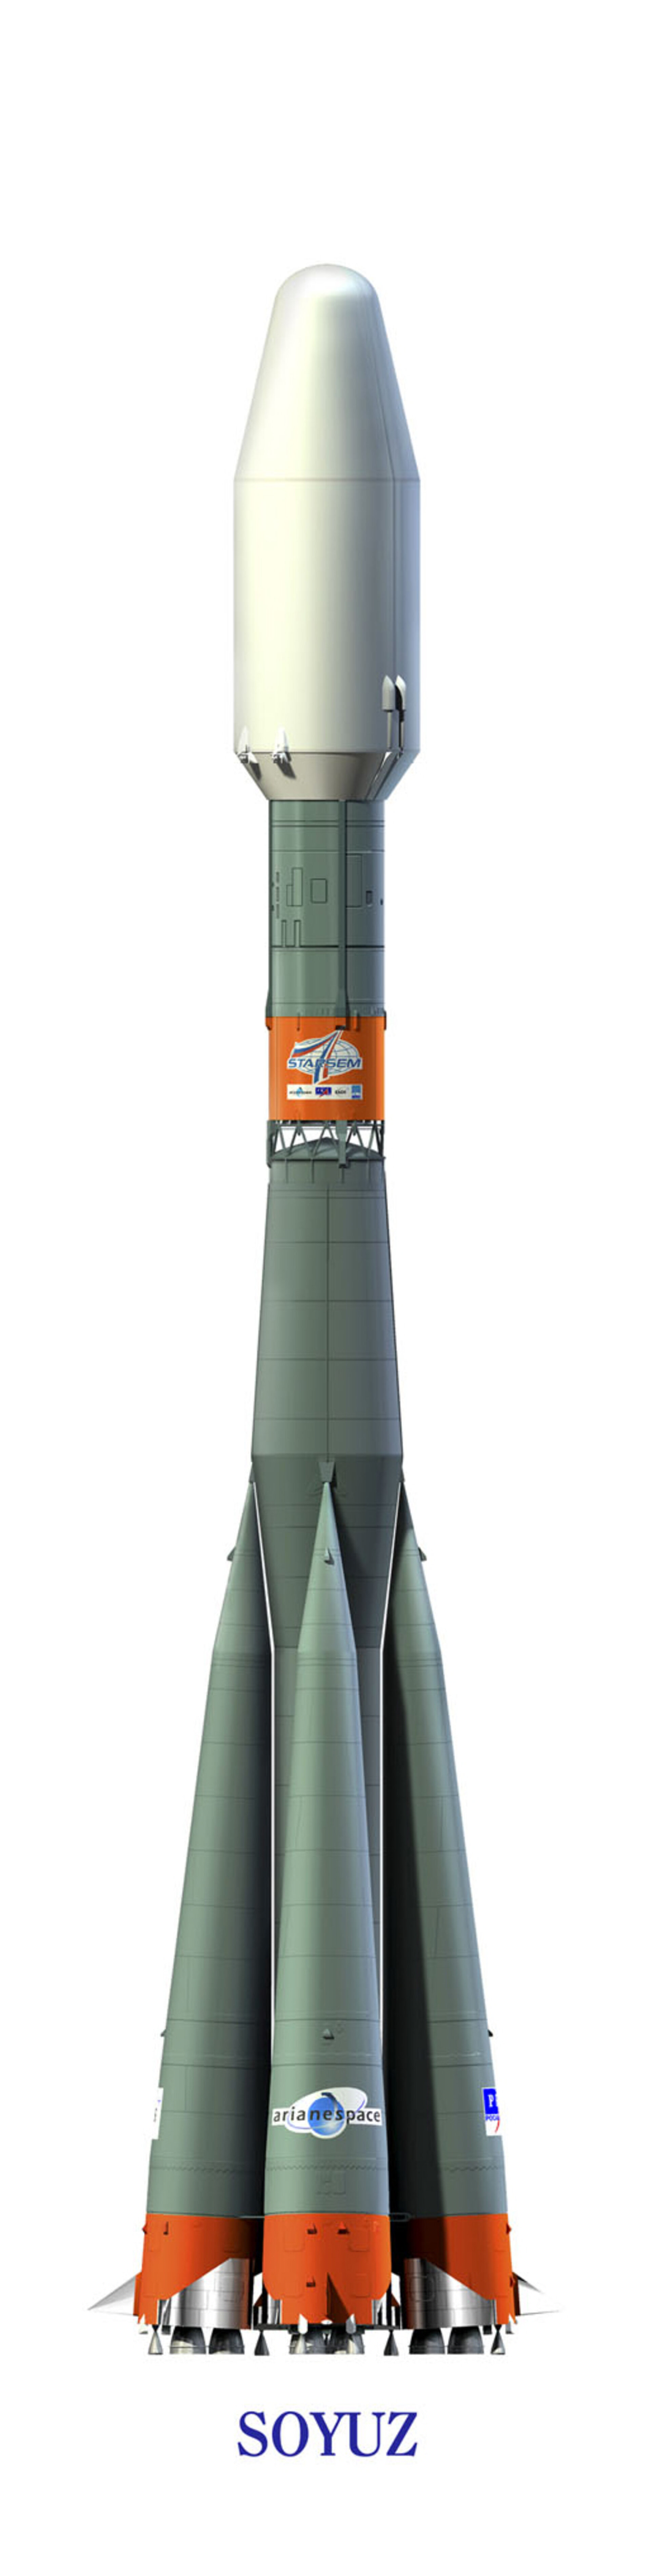 ESA - Soyuz launcher